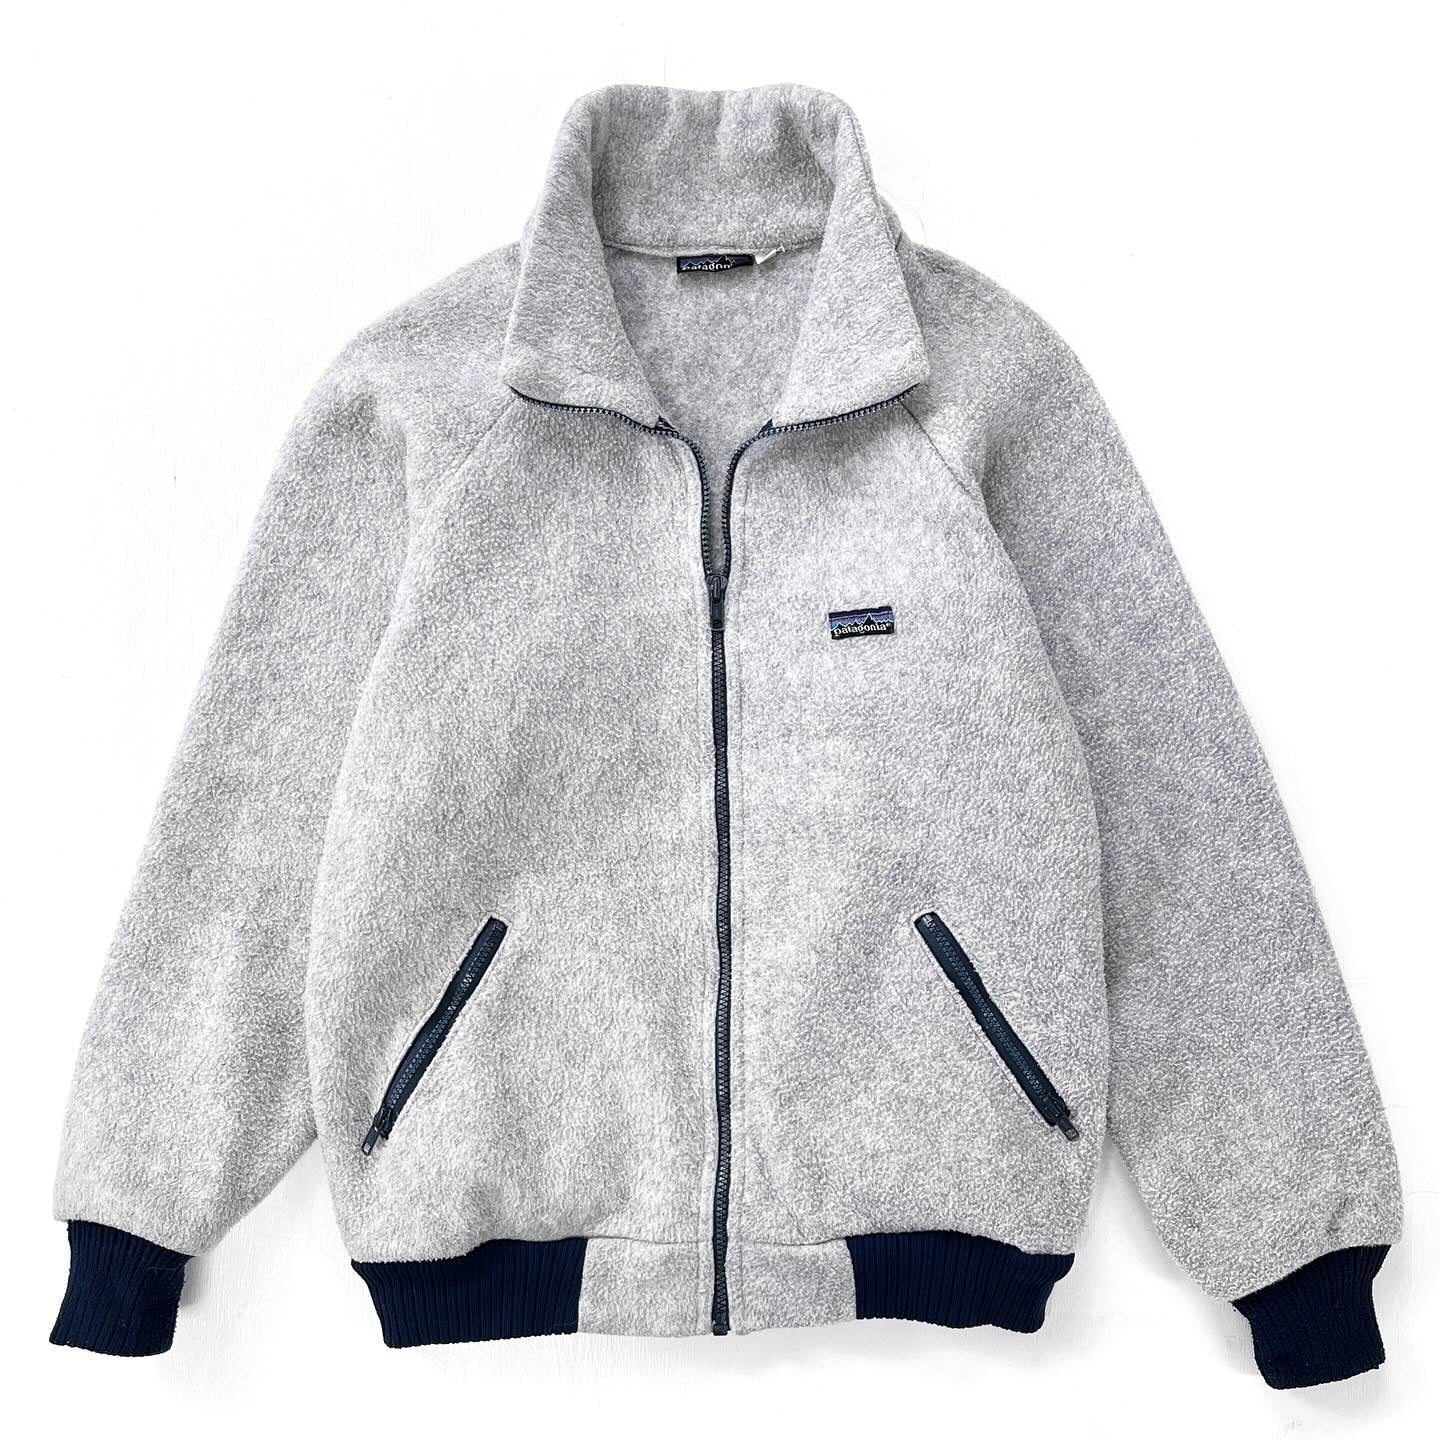 1983 Patagonia Bunting Full-Zip Fleece Jacket, Grey & Navy (S)